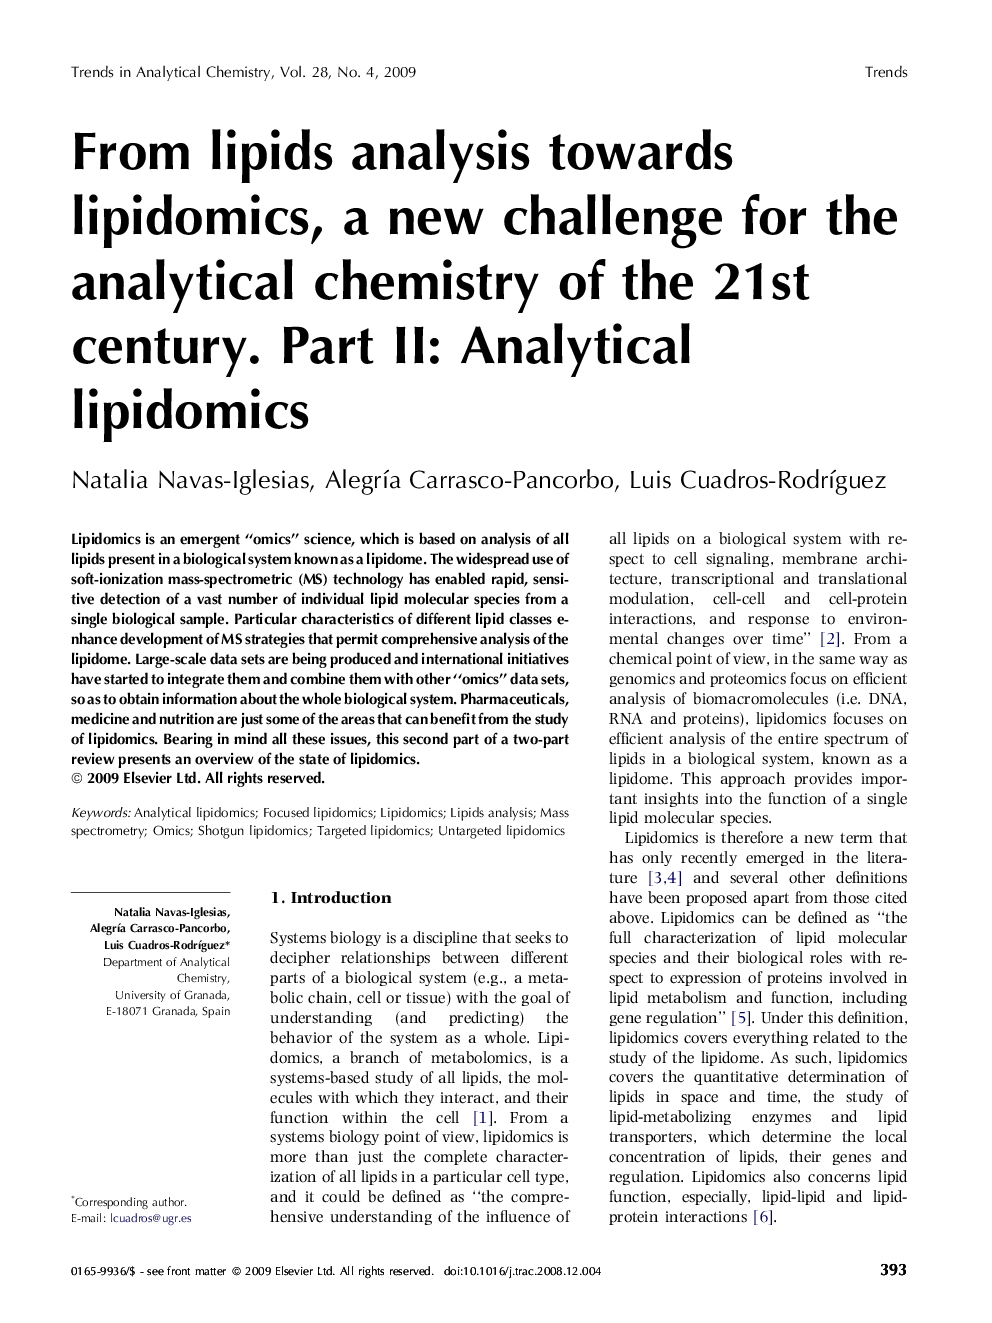 From lipids analysis towards lipidomics, a new challenge for the analytical chemistry of the 21st century. Part II: Analytical lipidomics